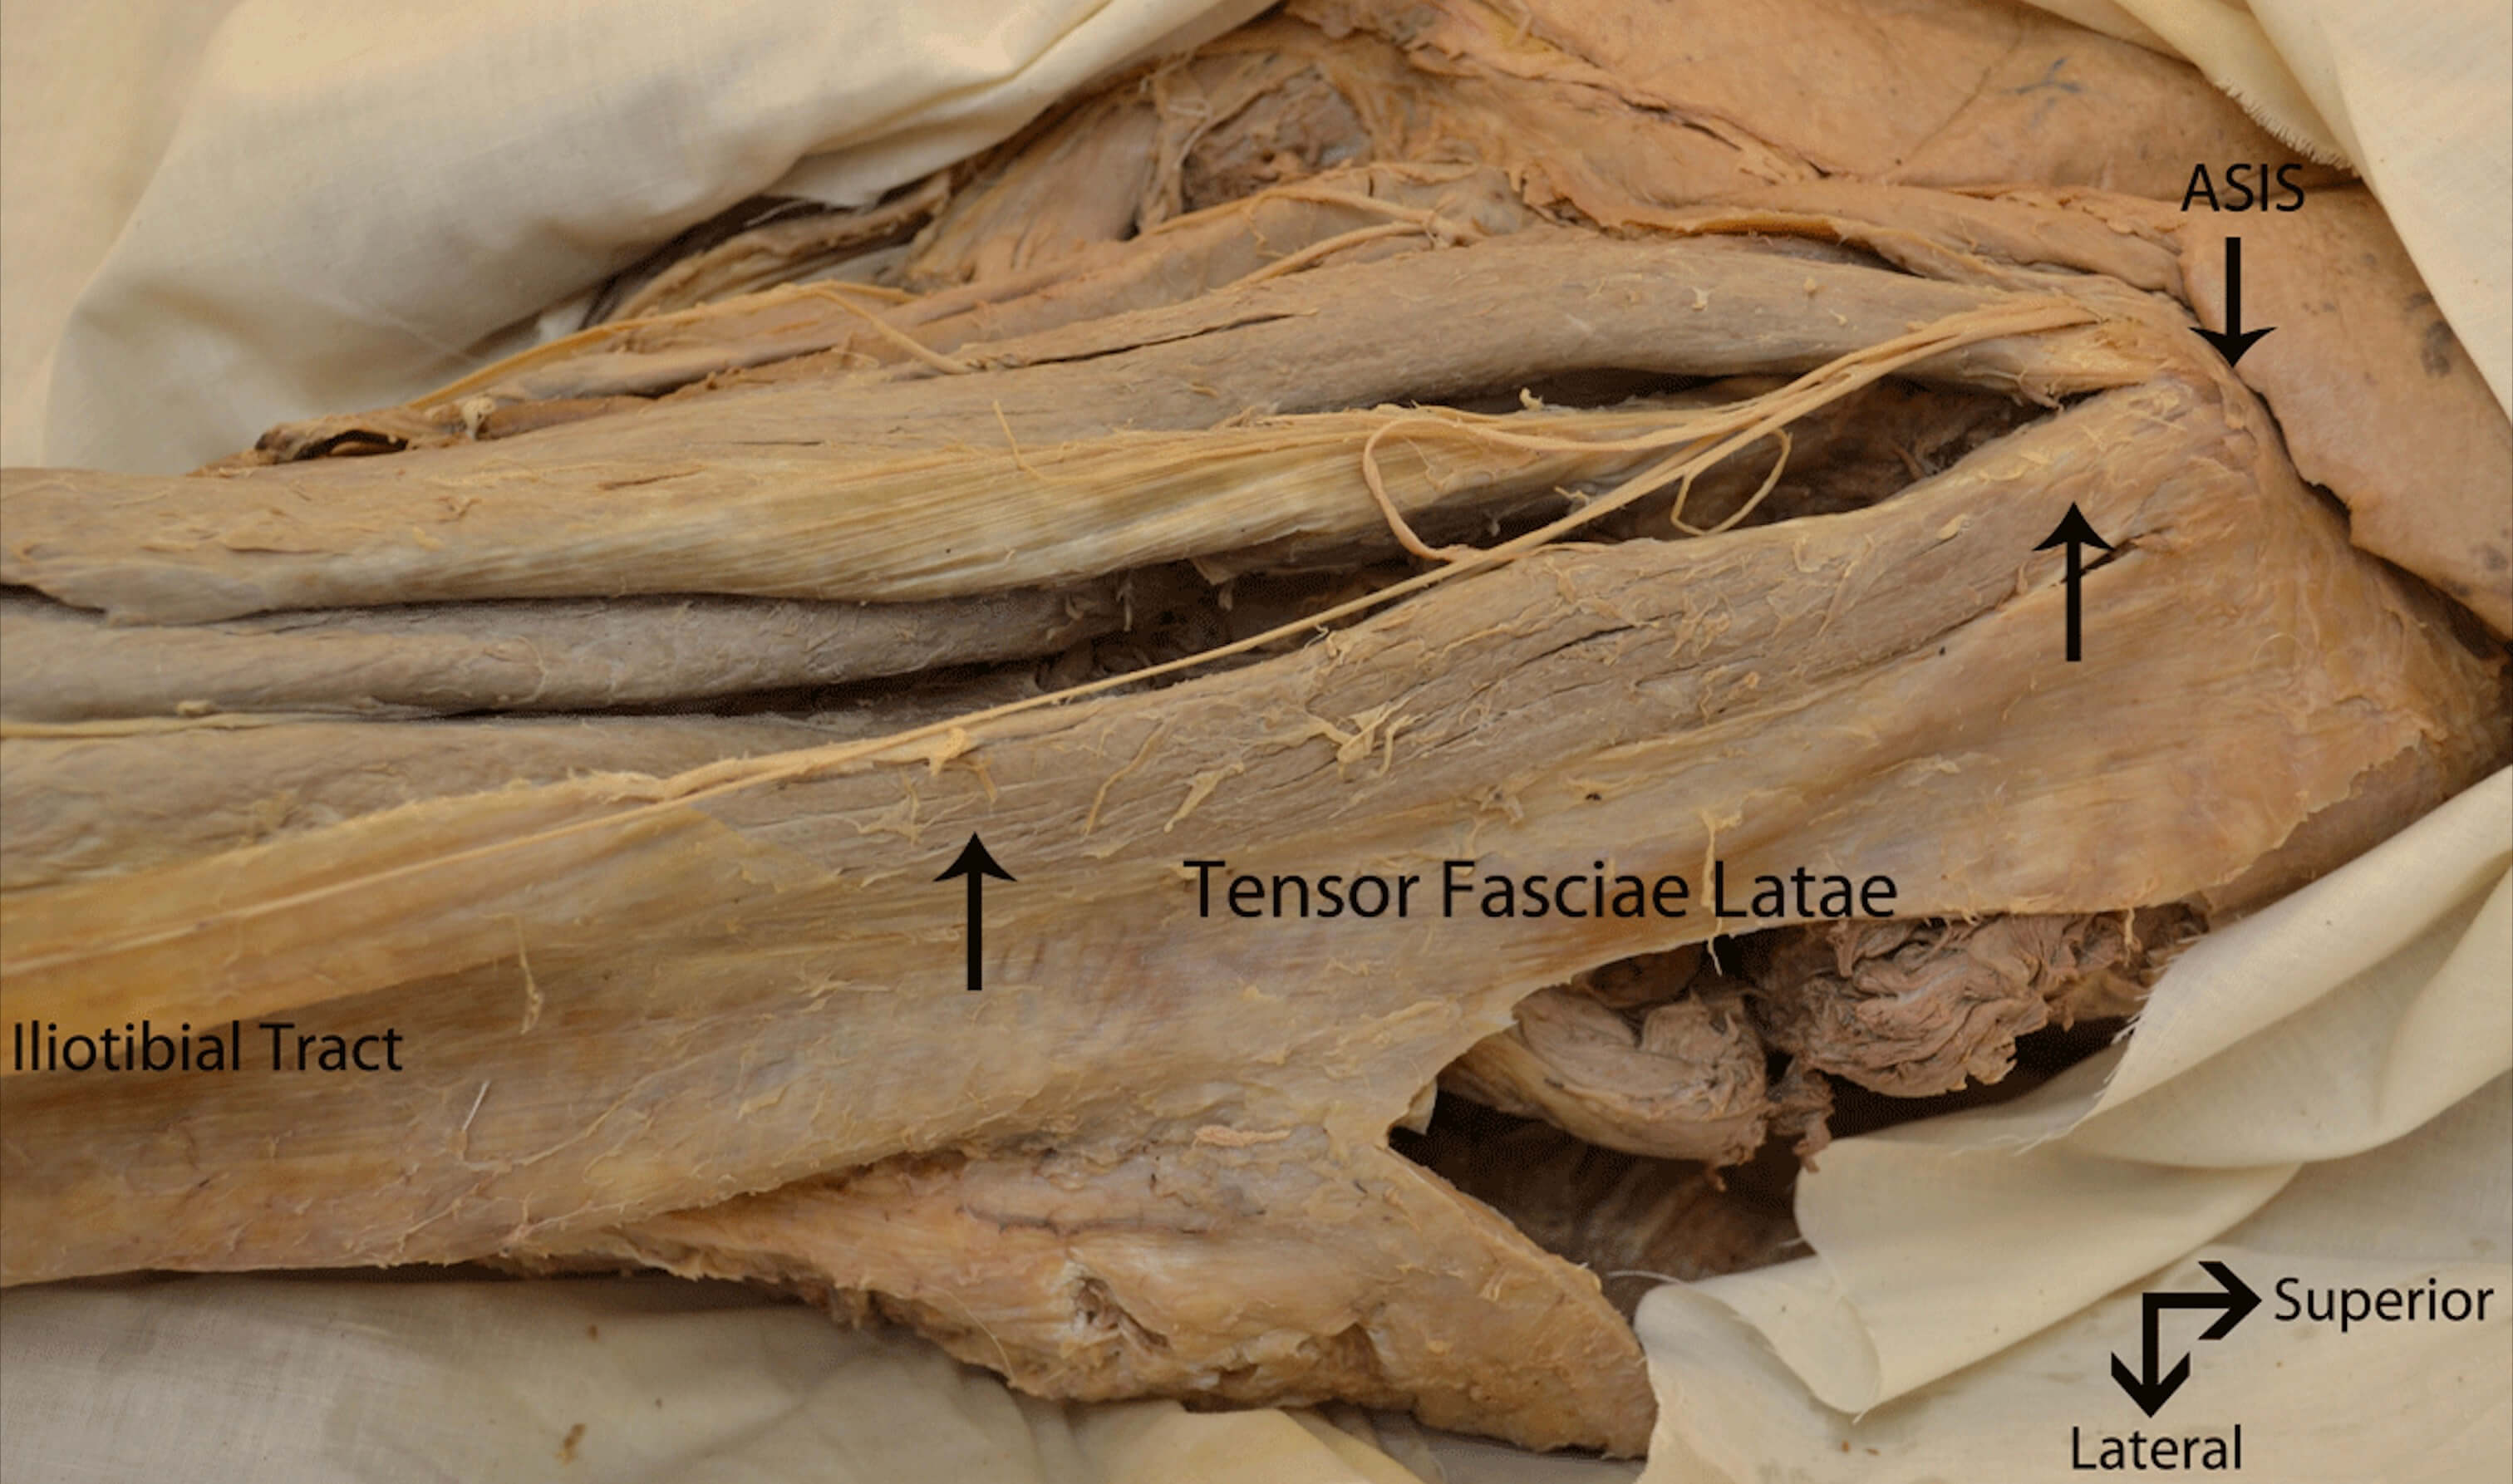 Tensor fasciae latae muscle: Anatomy and function